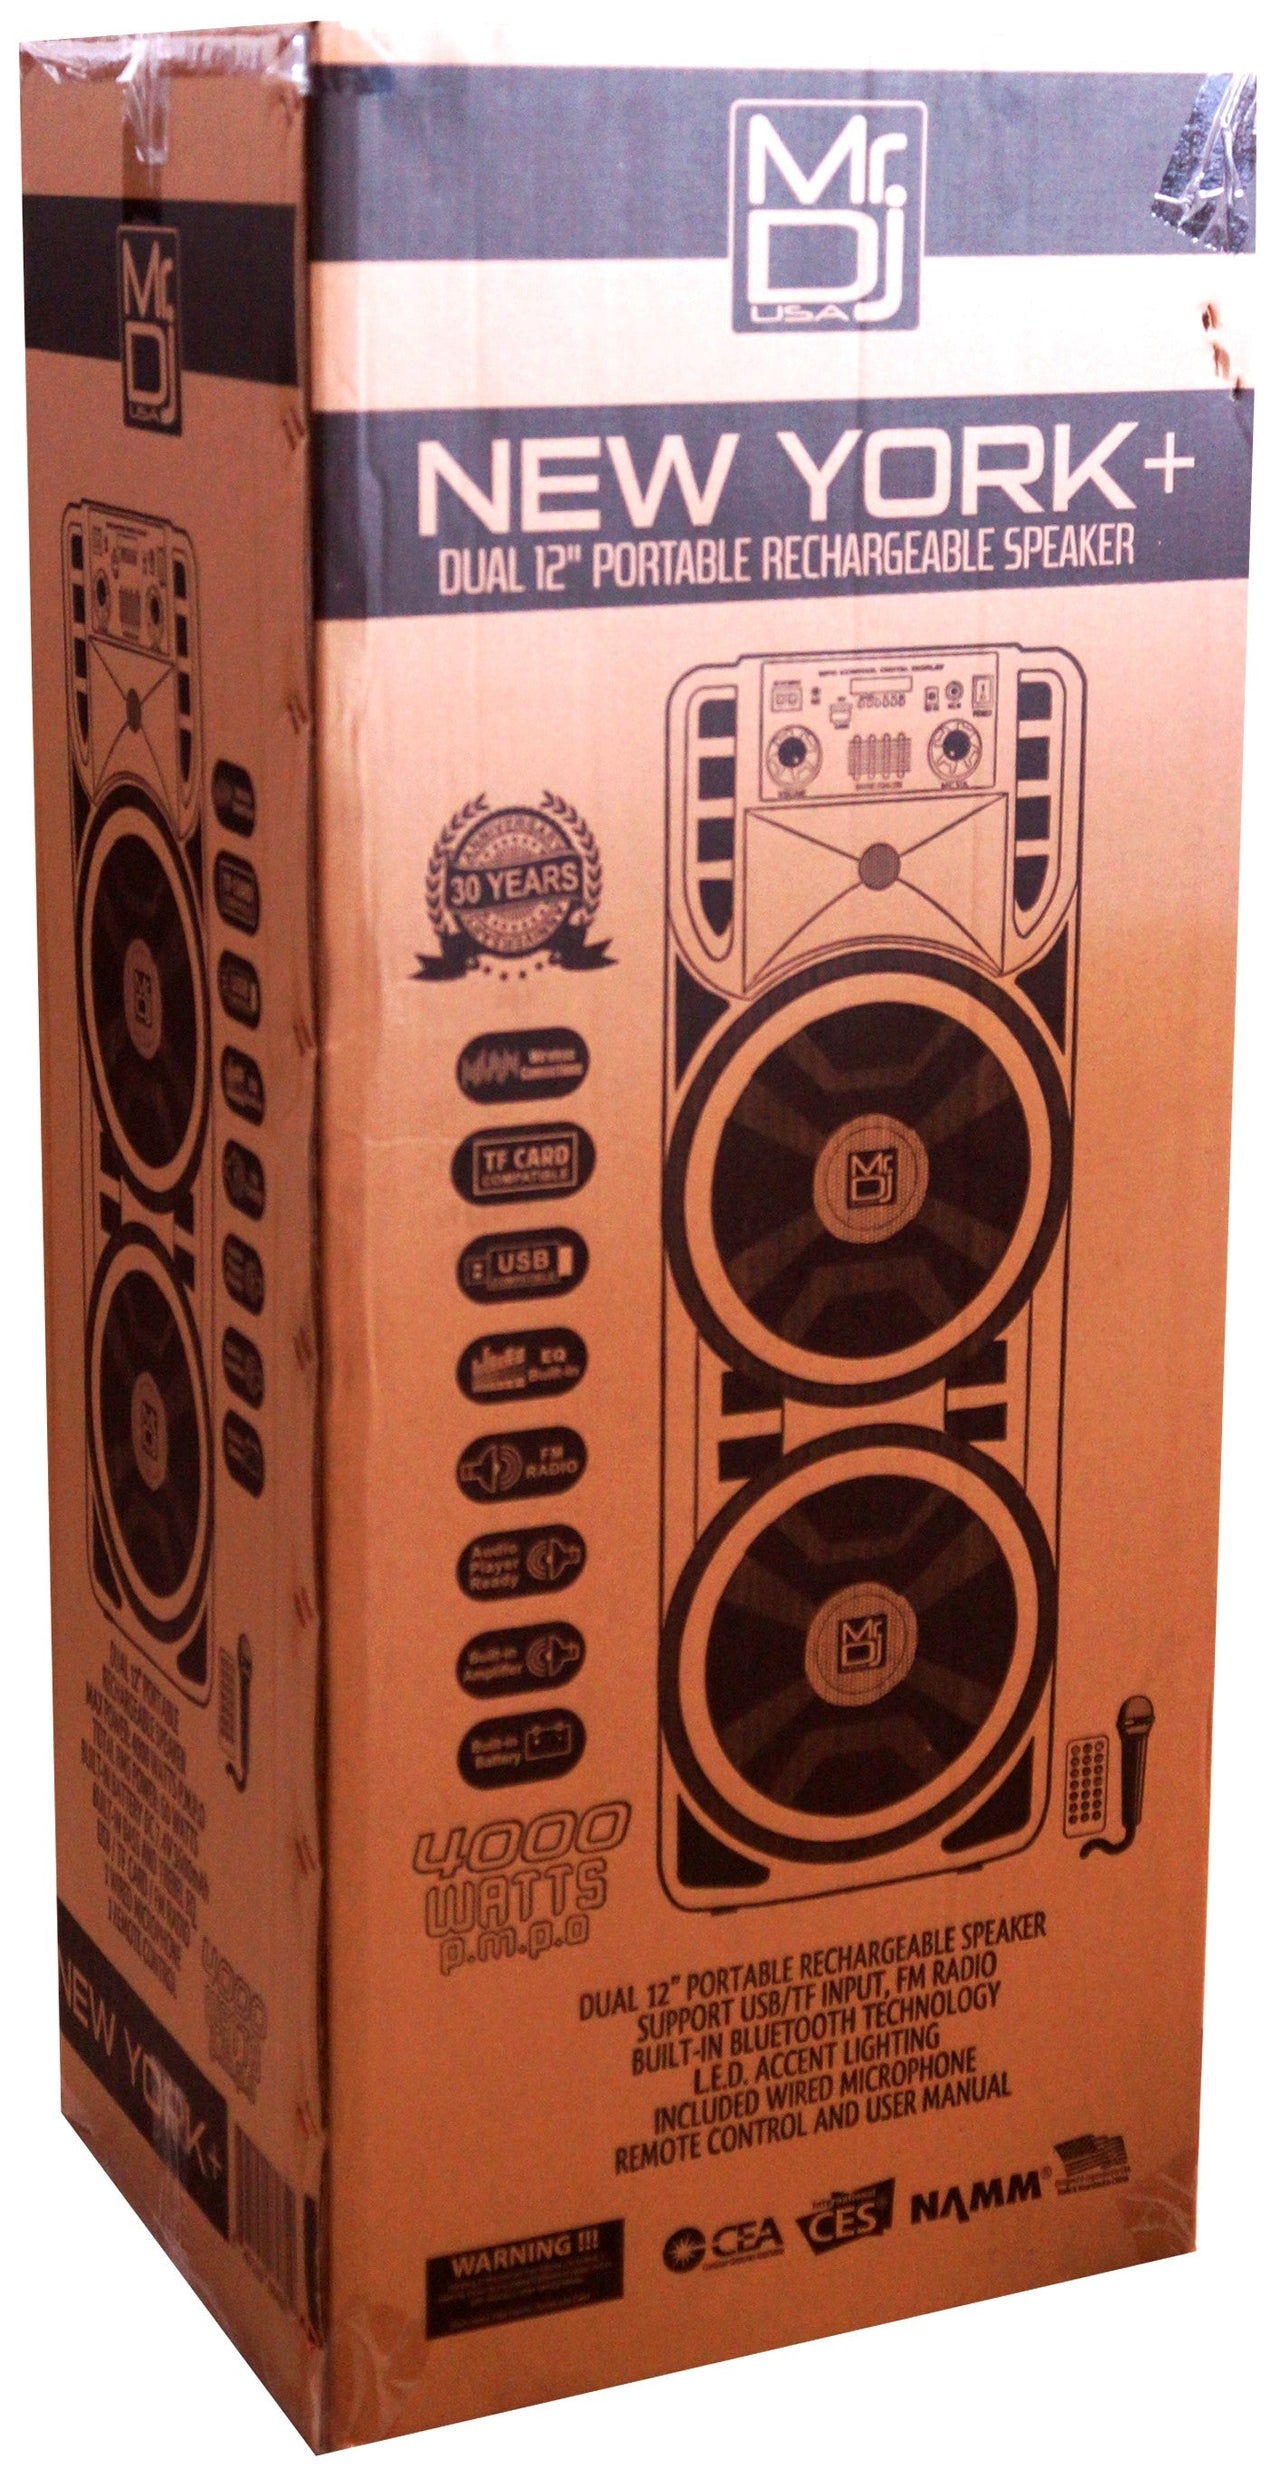 2 MR DJ NEWYORK+ 12" X 2 Rechargeable Portable Bluetooth Karaoke Speaker with Party Flame Lights Microphone TWS USB FM Radio